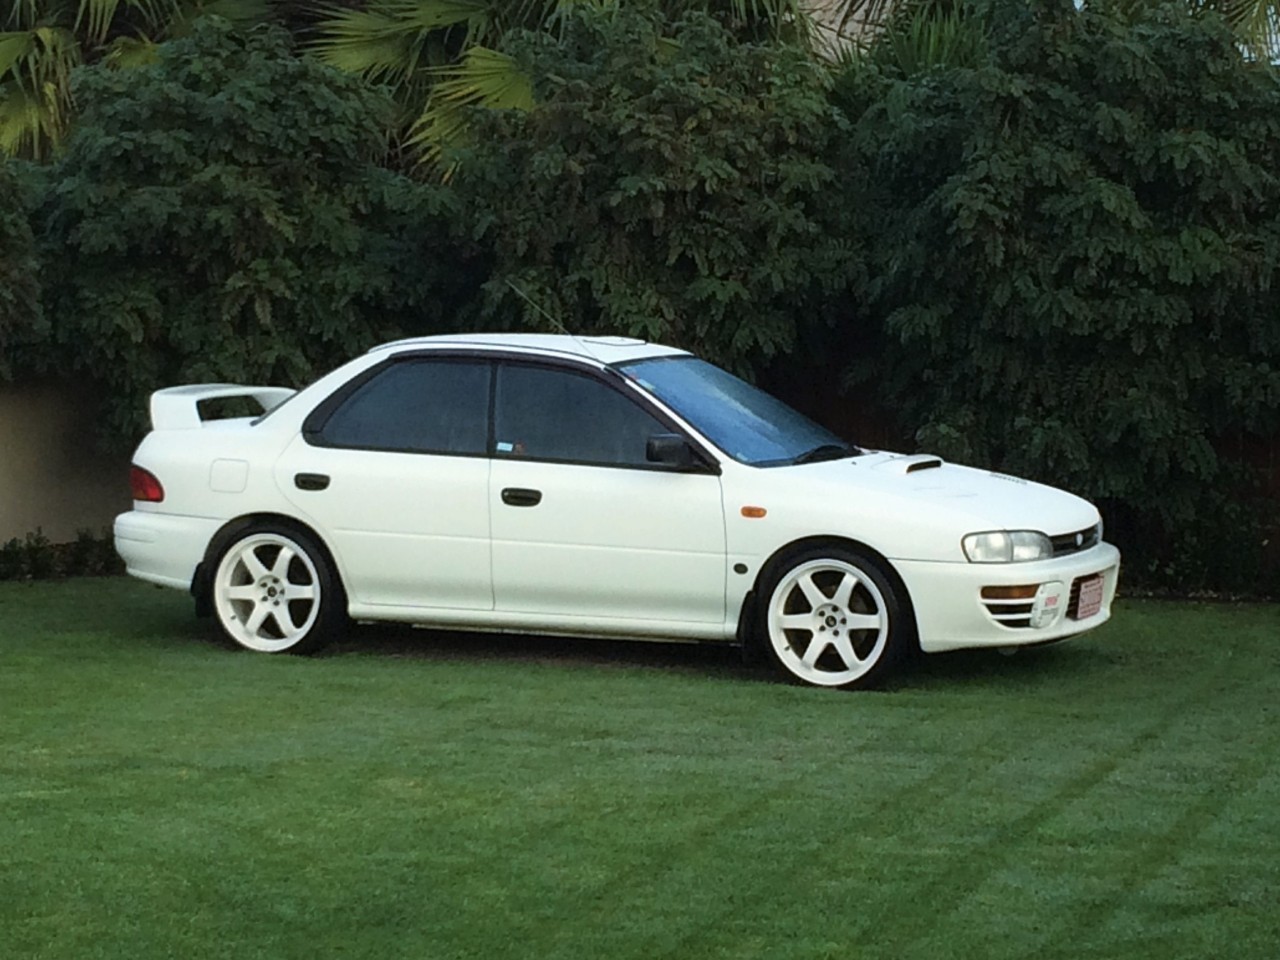 Chris Watt's 1995 Subaru WRX RA is one of the 25 WRX competition winners.